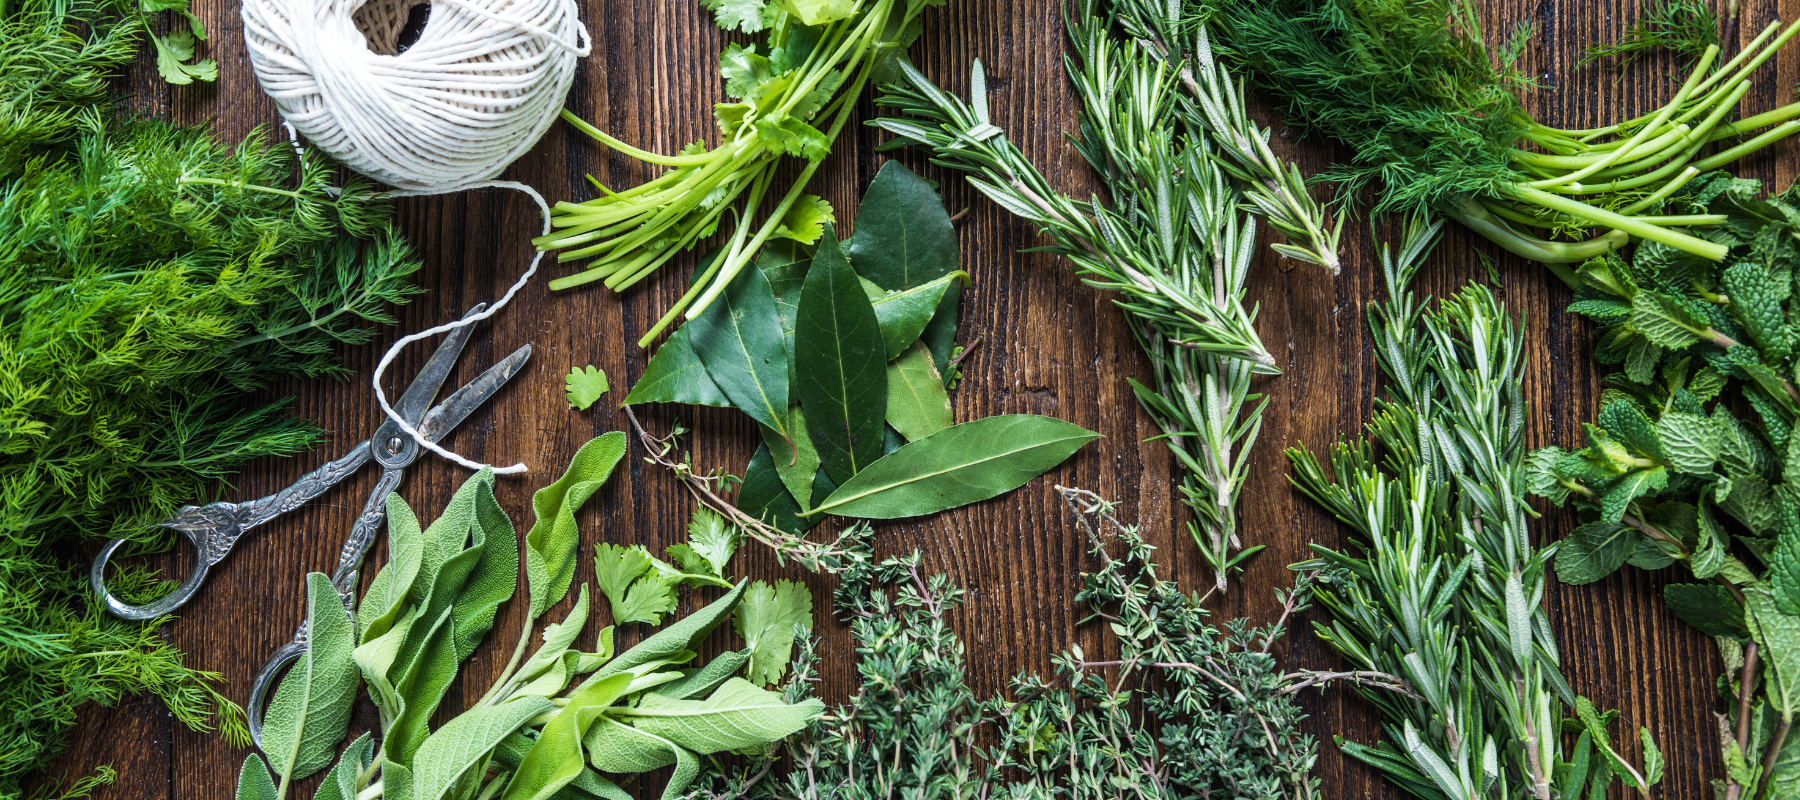 Herbs - More than a Kitchen Garden